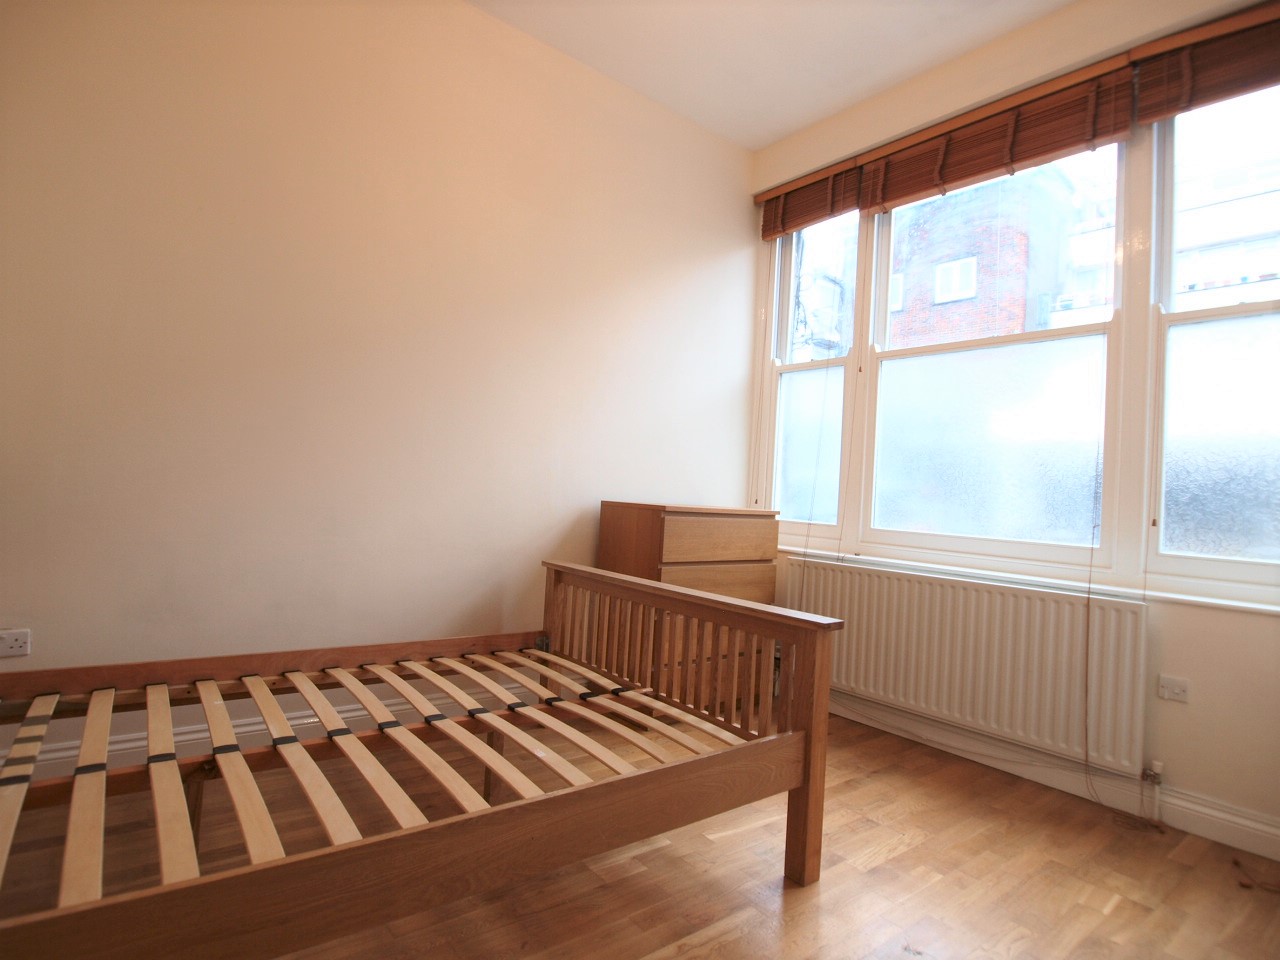 2 bedrooms flat, 275 Hornsey Road Islington London